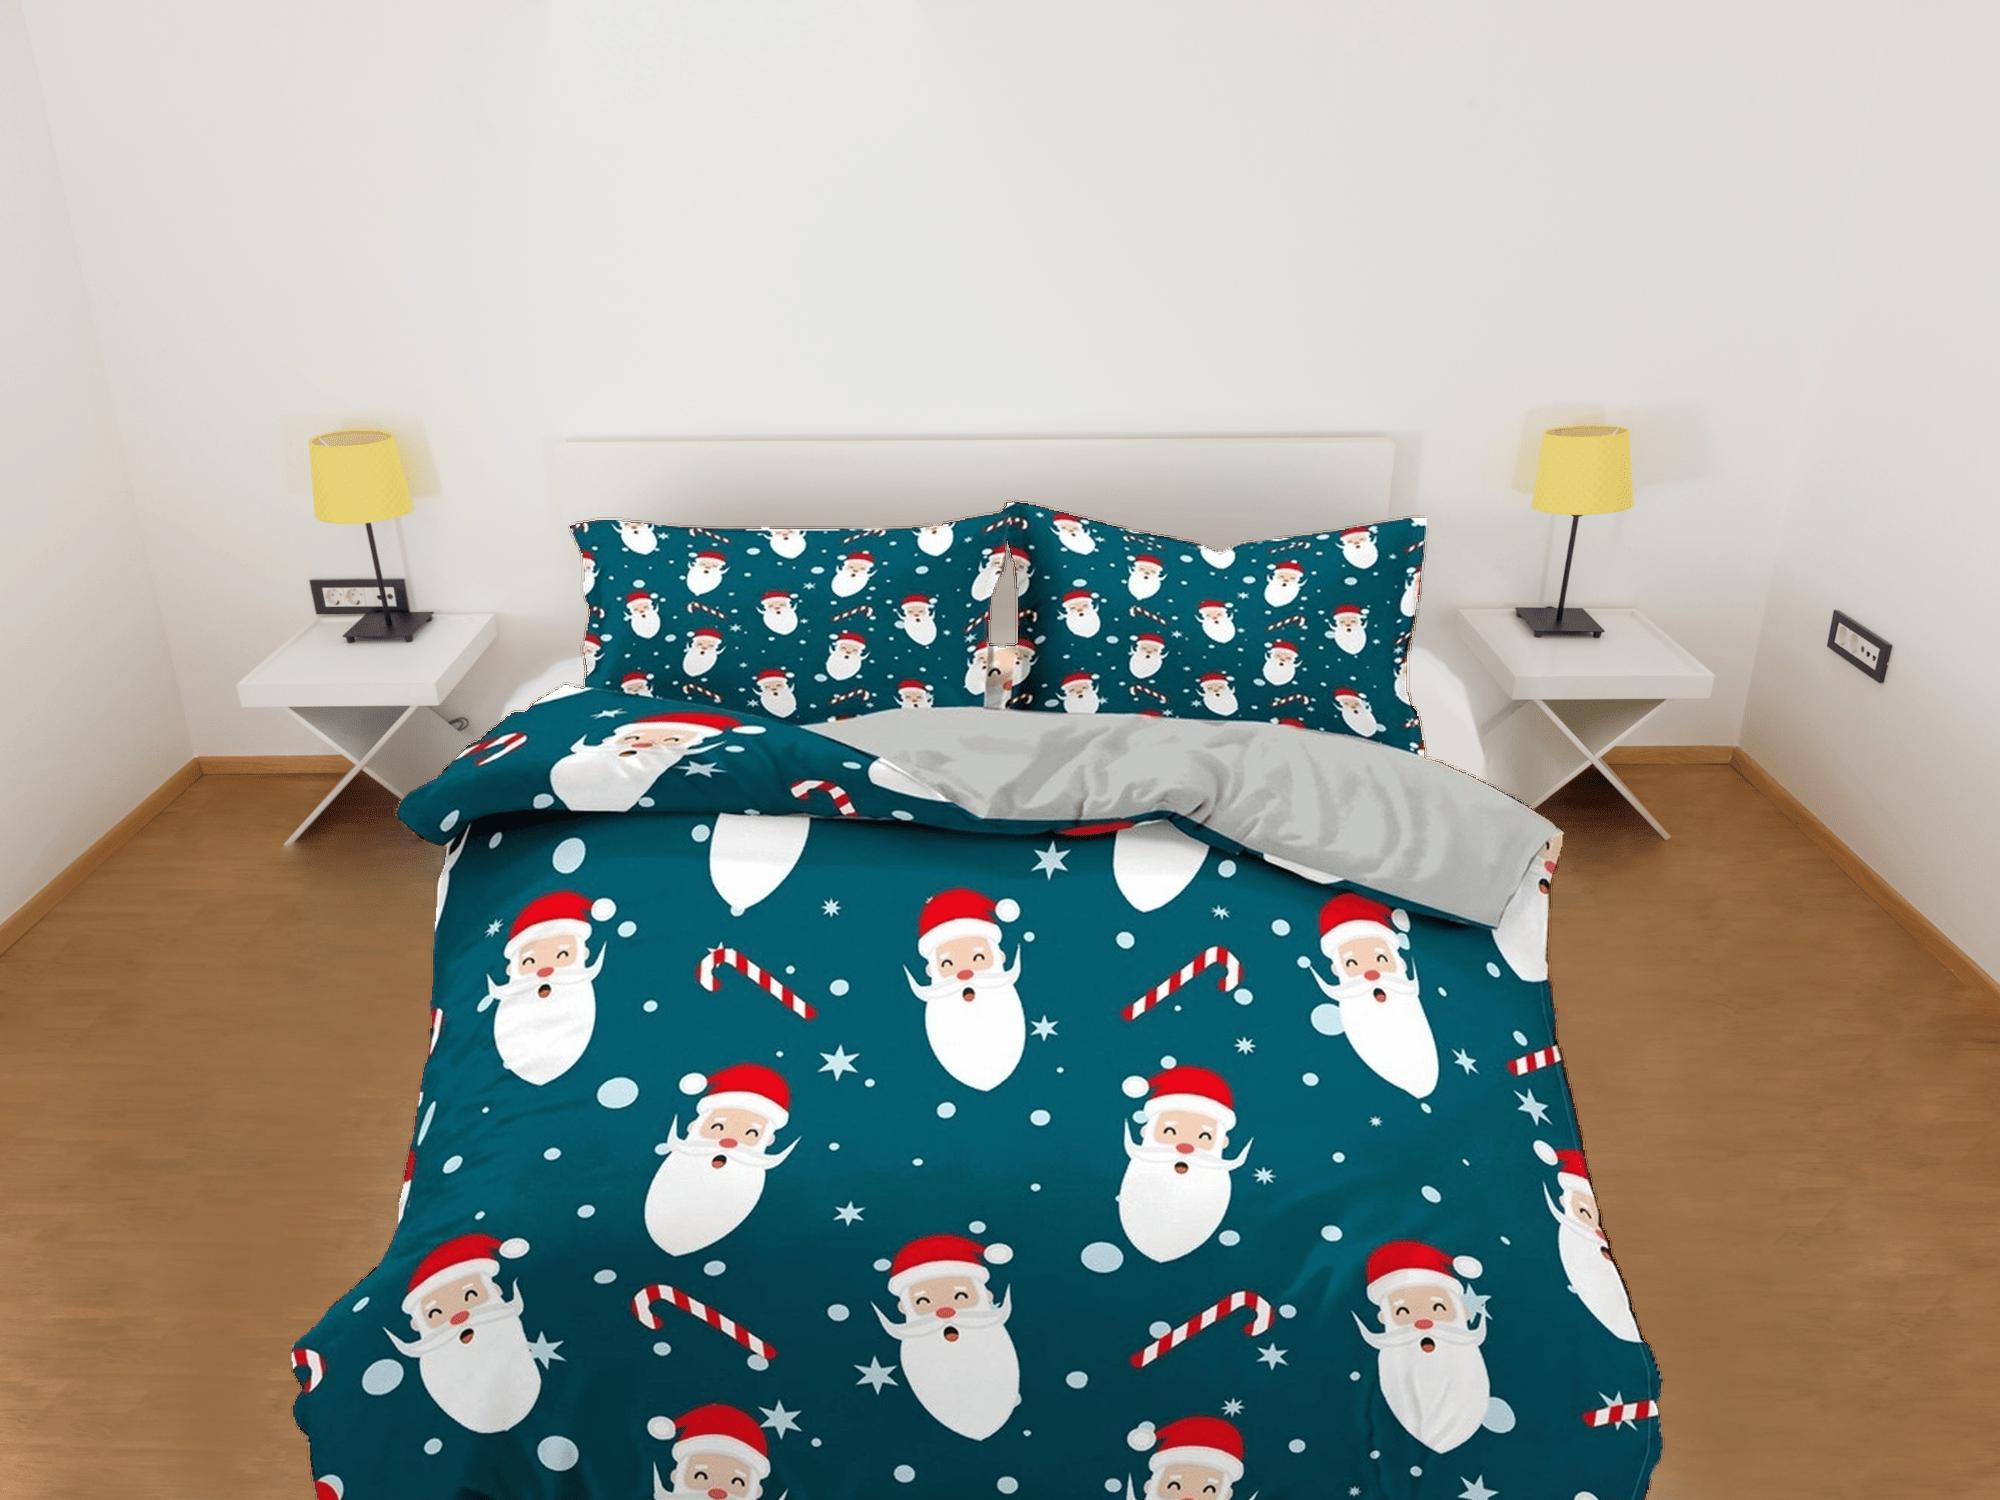 daintyduvet Santa Claus and candy cane Christmas bedding & pillowcase holiday gift duvet cover king queen toddler bedding baby Christmas farmhouse decor